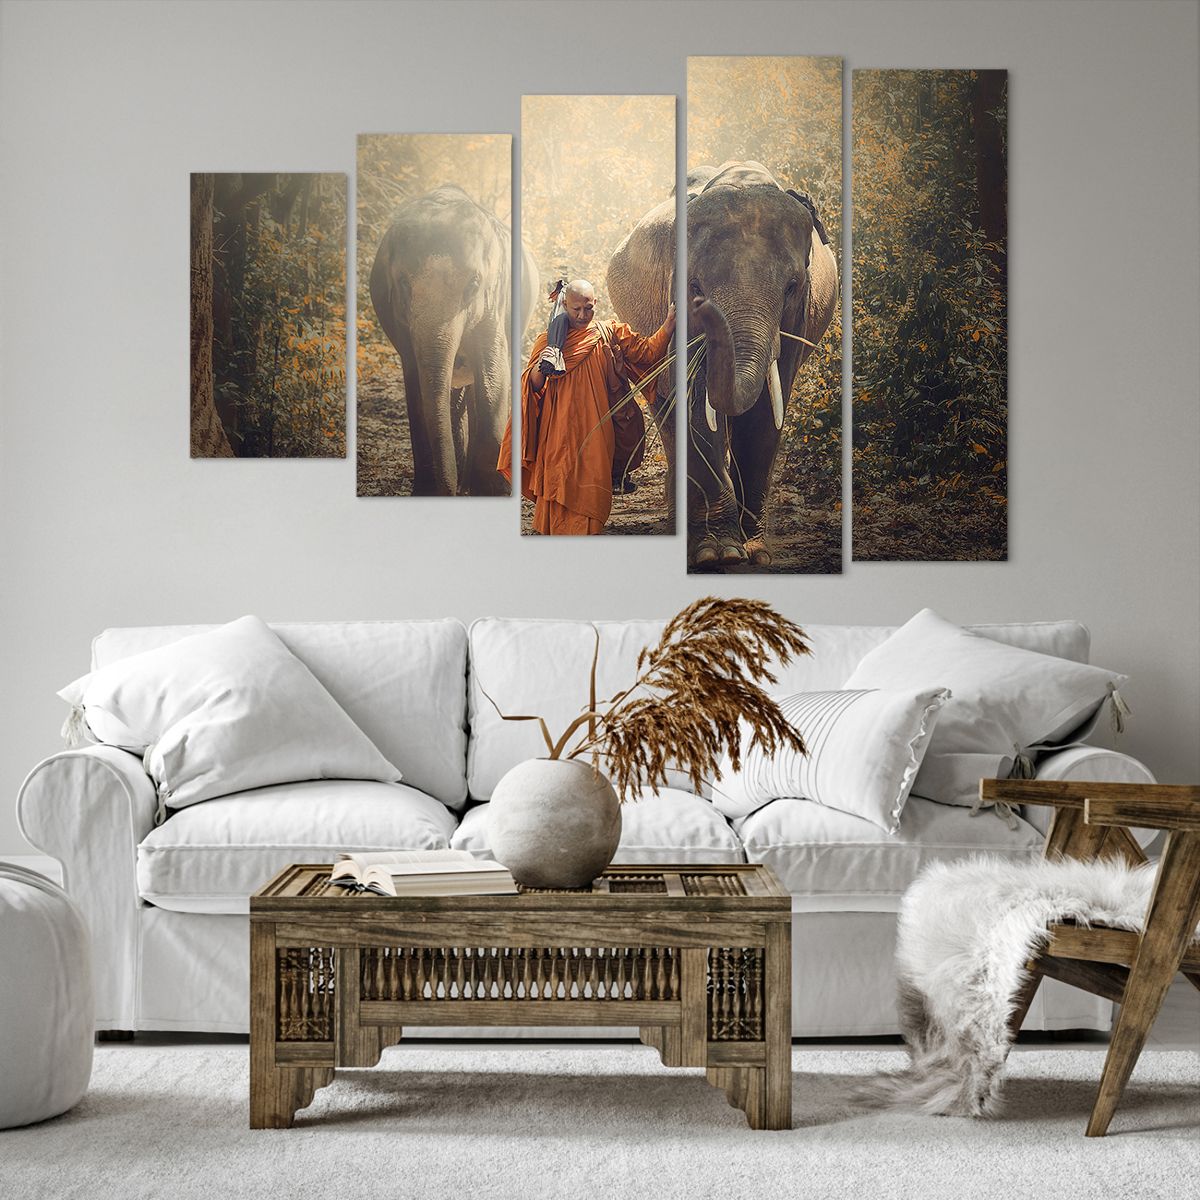 Cuadro sobre lienzo Asia, Cuadro sobre lienzo Elefante, Cuadro sobre lienzo Monje, Cuadro sobre lienzo Selva, Cuadro sobre lienzo Budismo